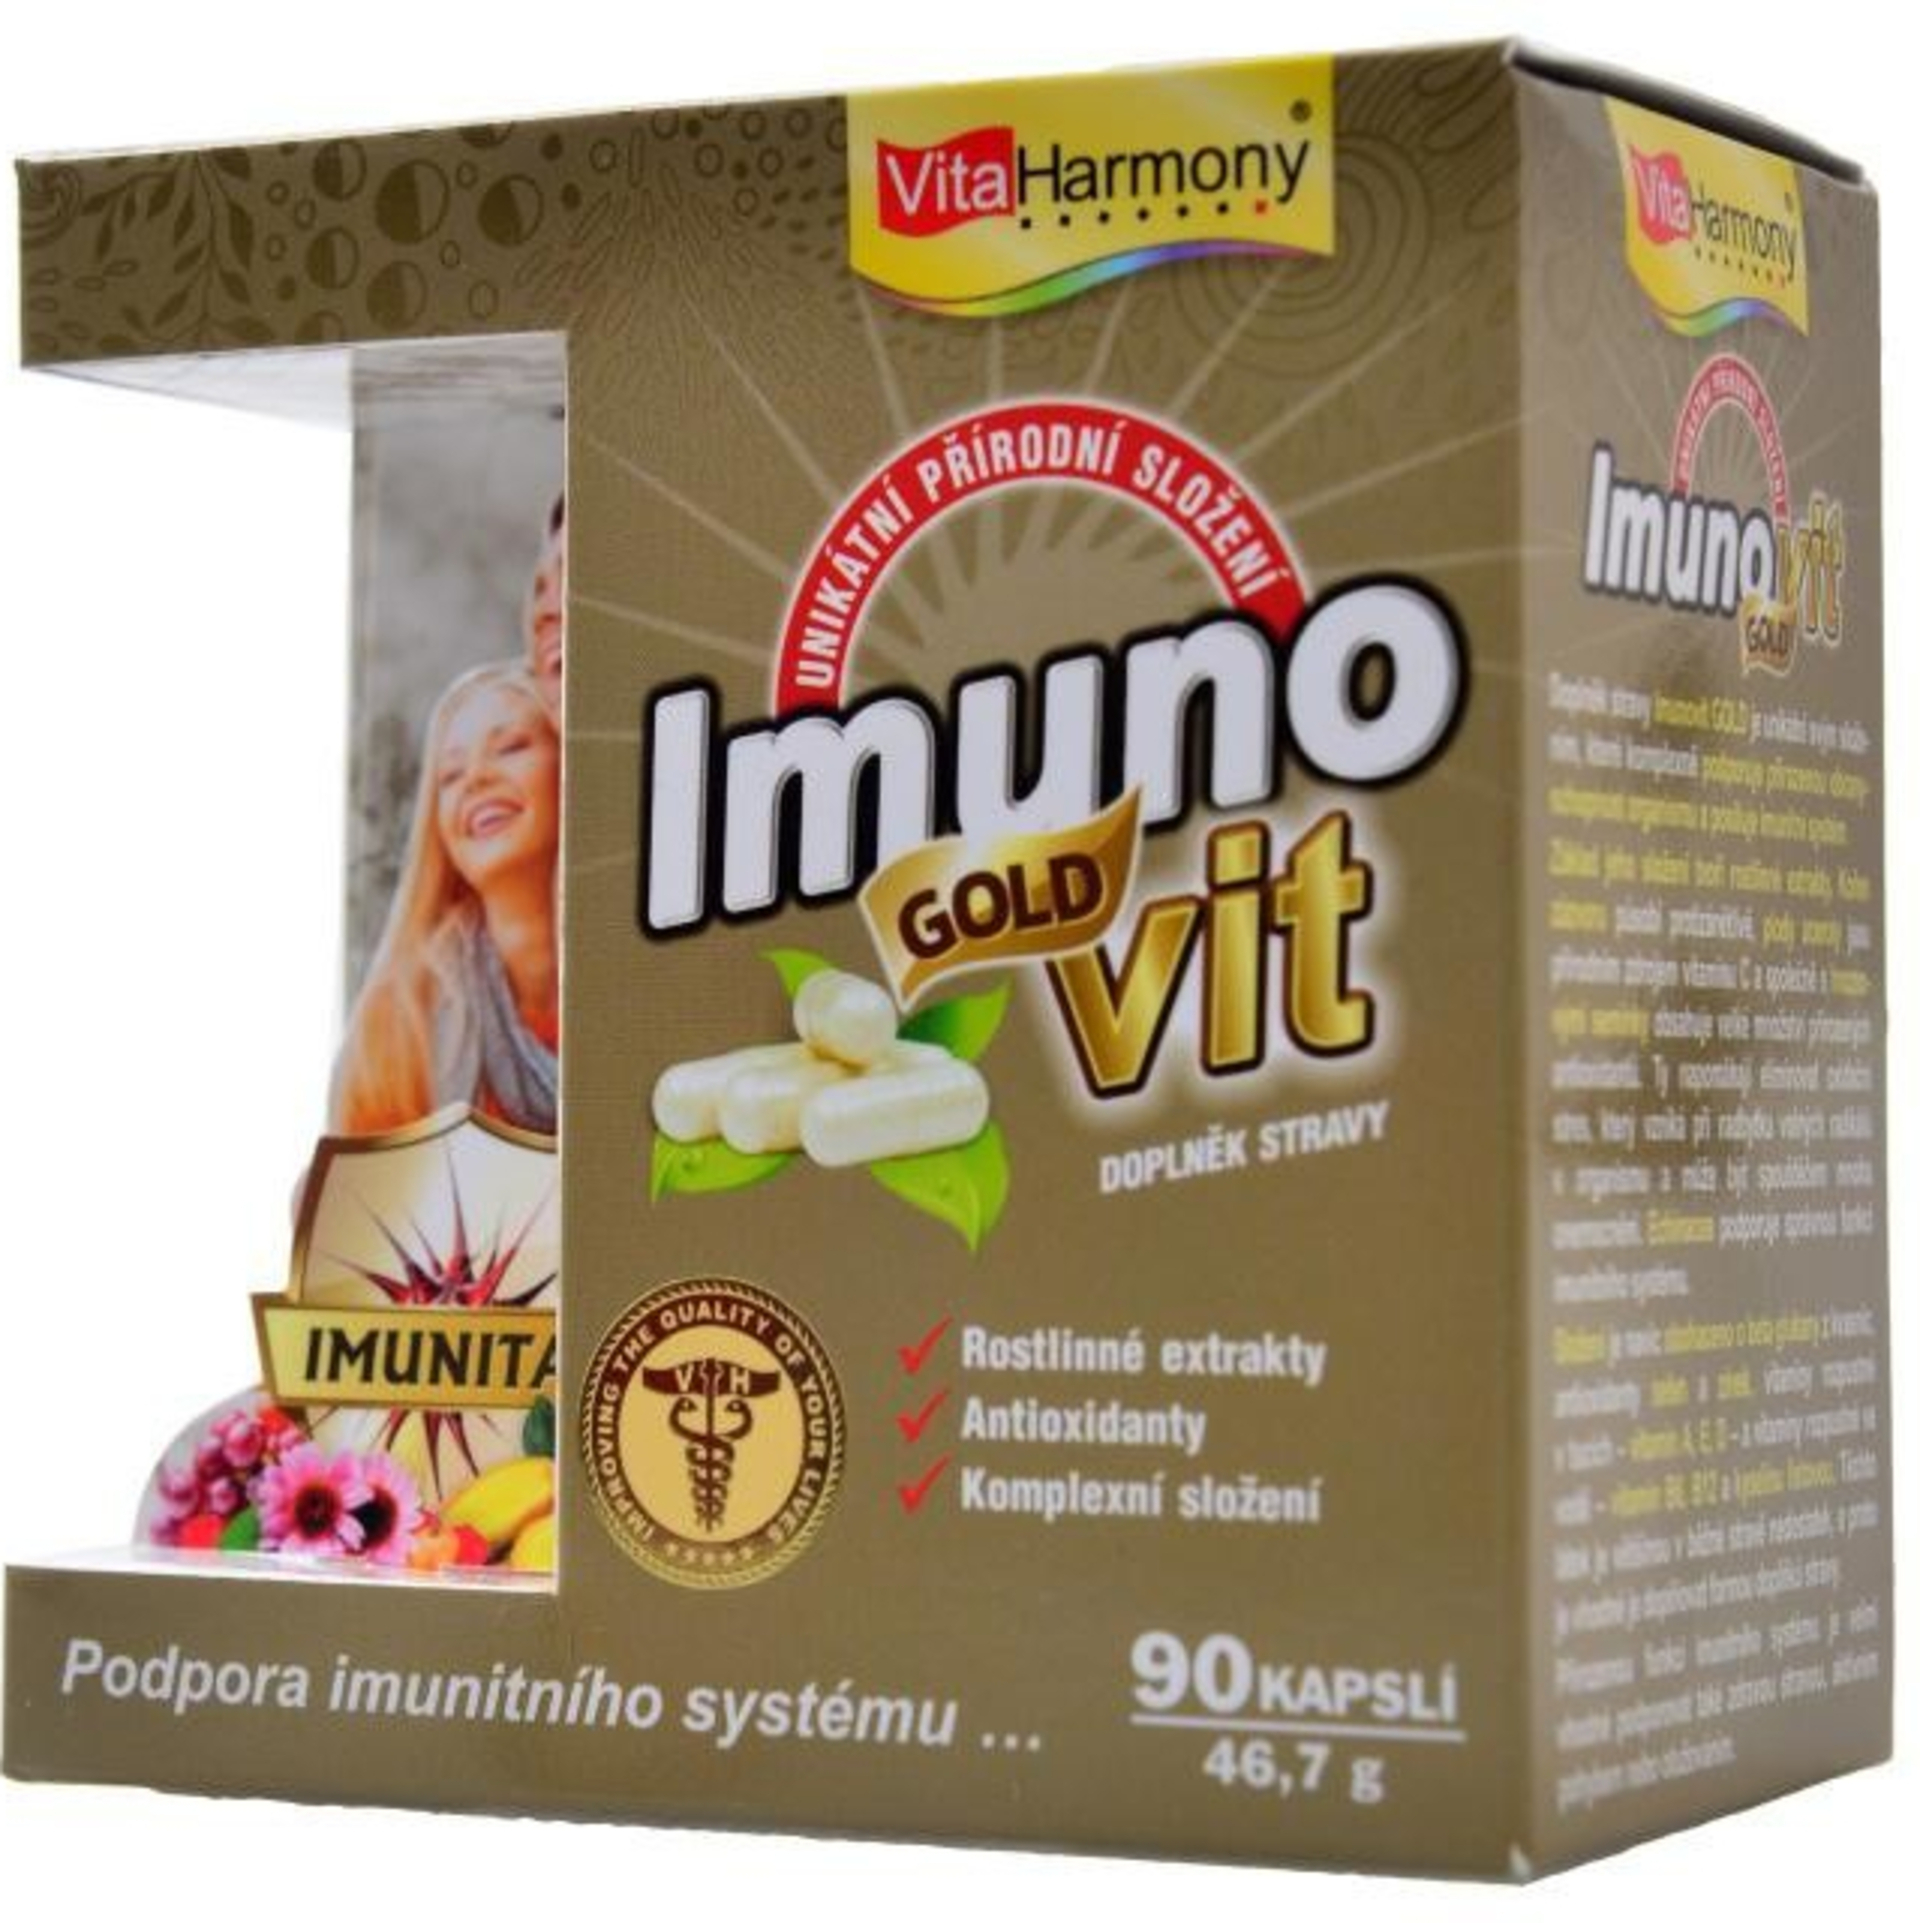 VitaHarmony Imunovit Gold 90 tablet expirace